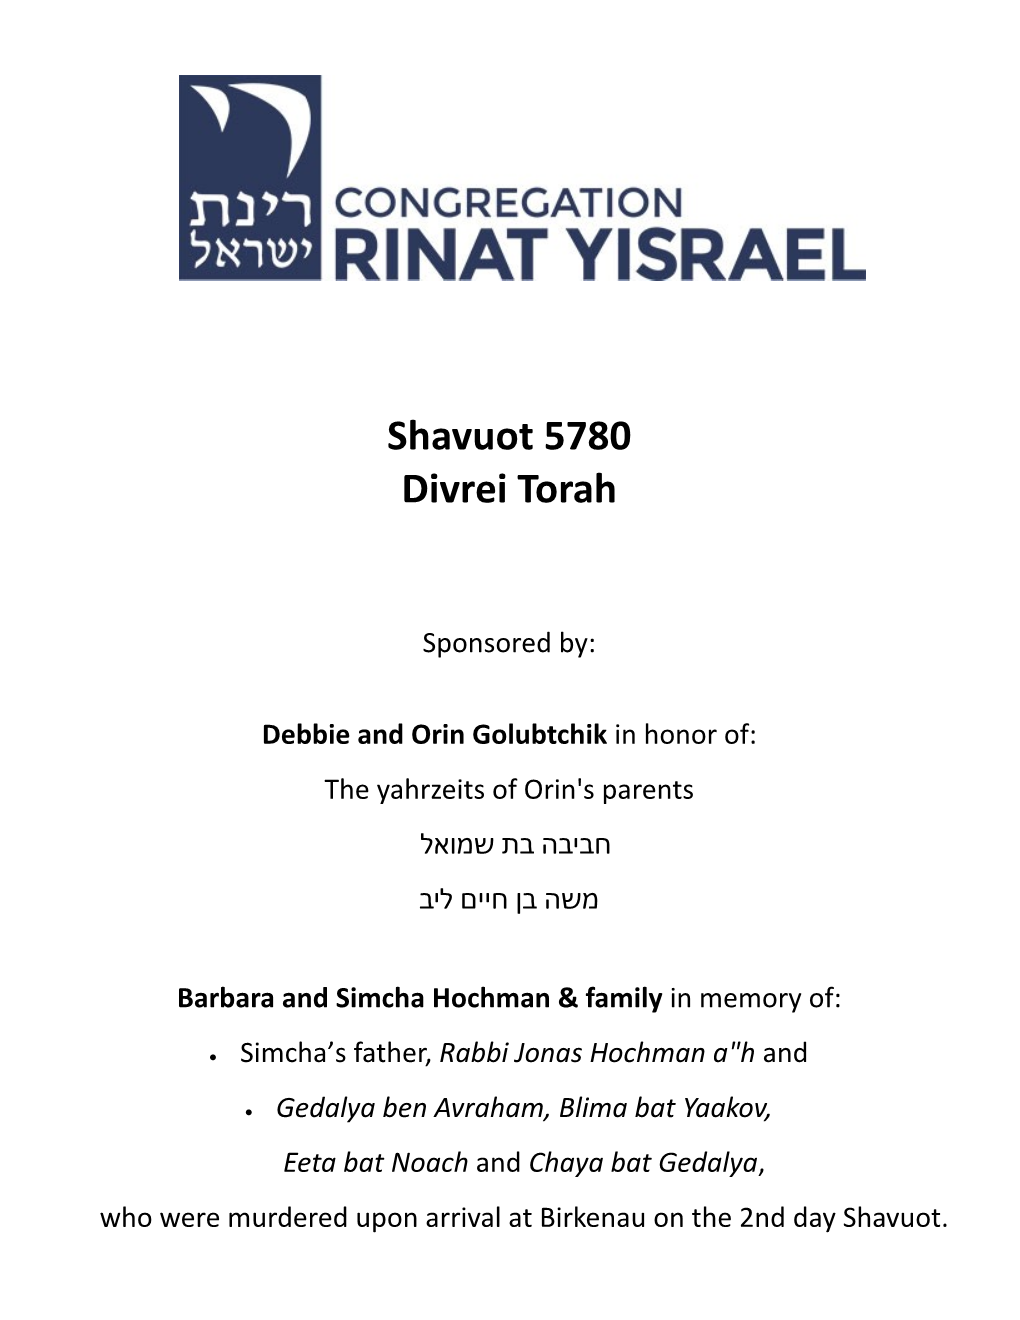 Shavuot 5780 Divrei Torah